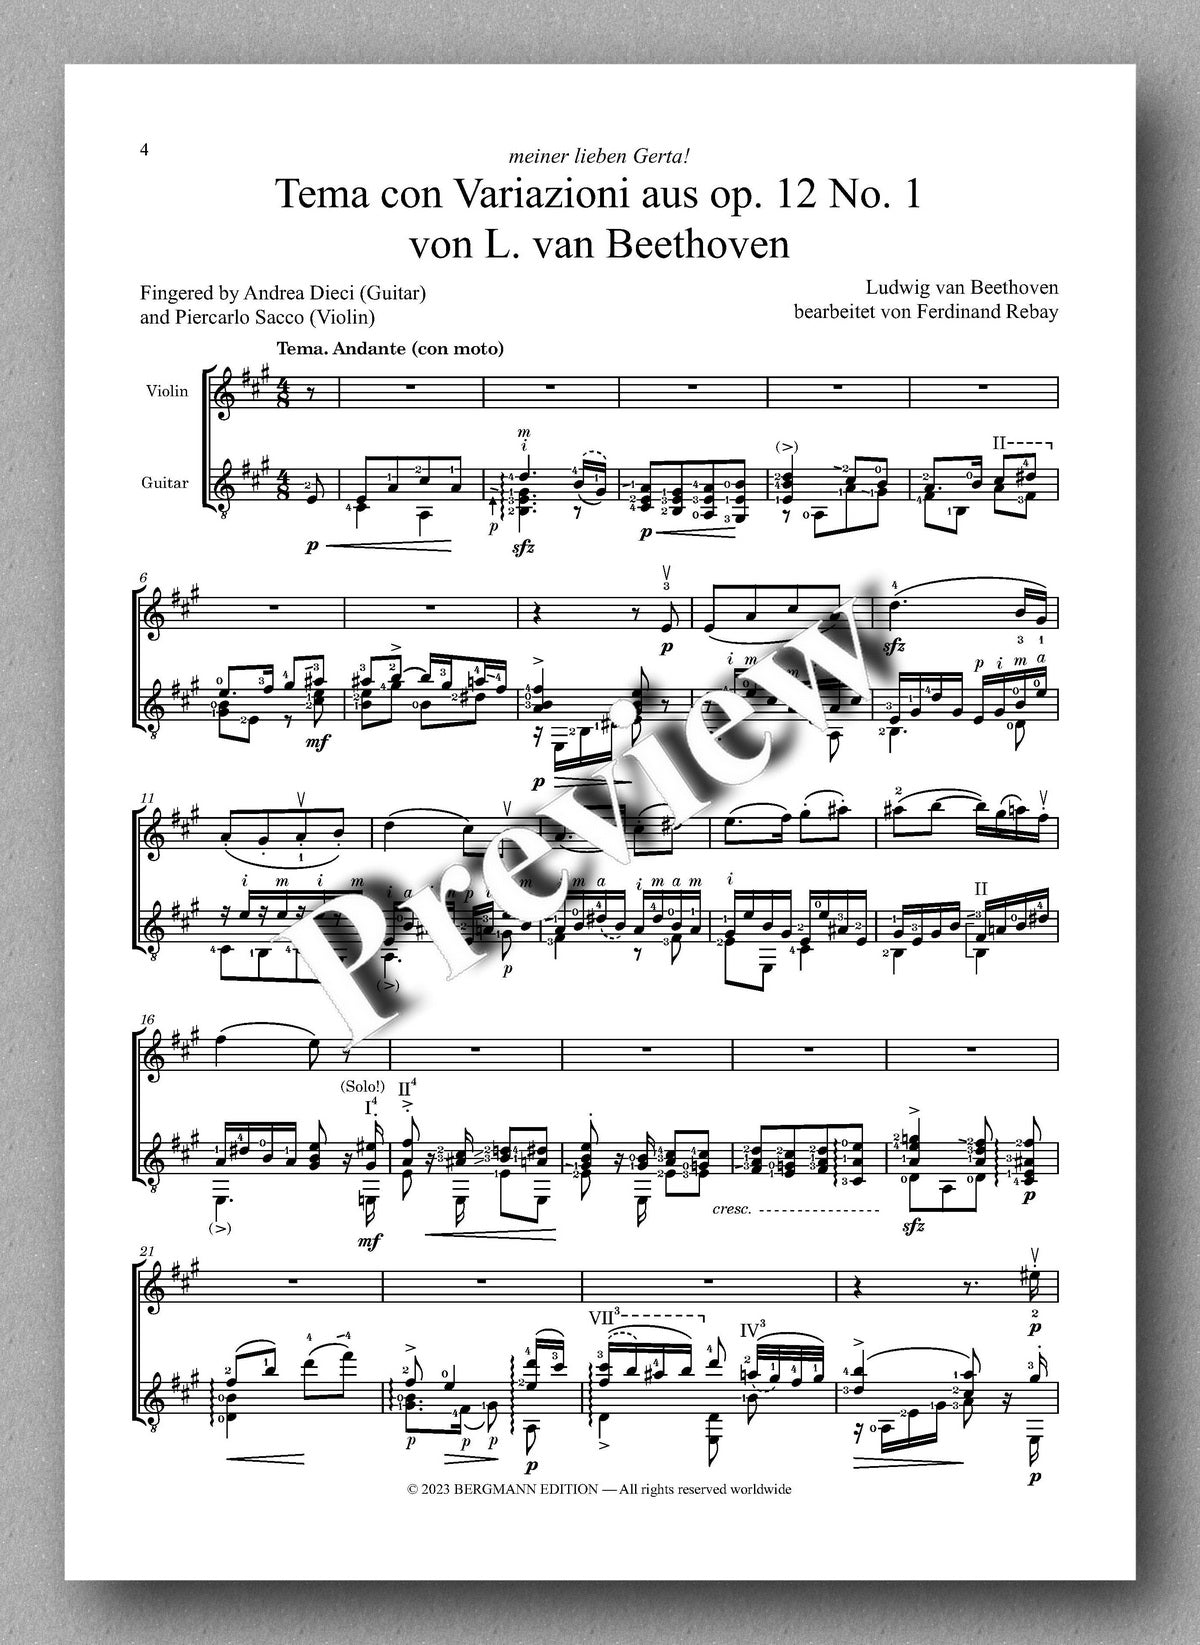 Ferdinand Rebay, Tema con Variazioni aus op. 12 No. 1 von L. van Beethoven - preview of the music score 1